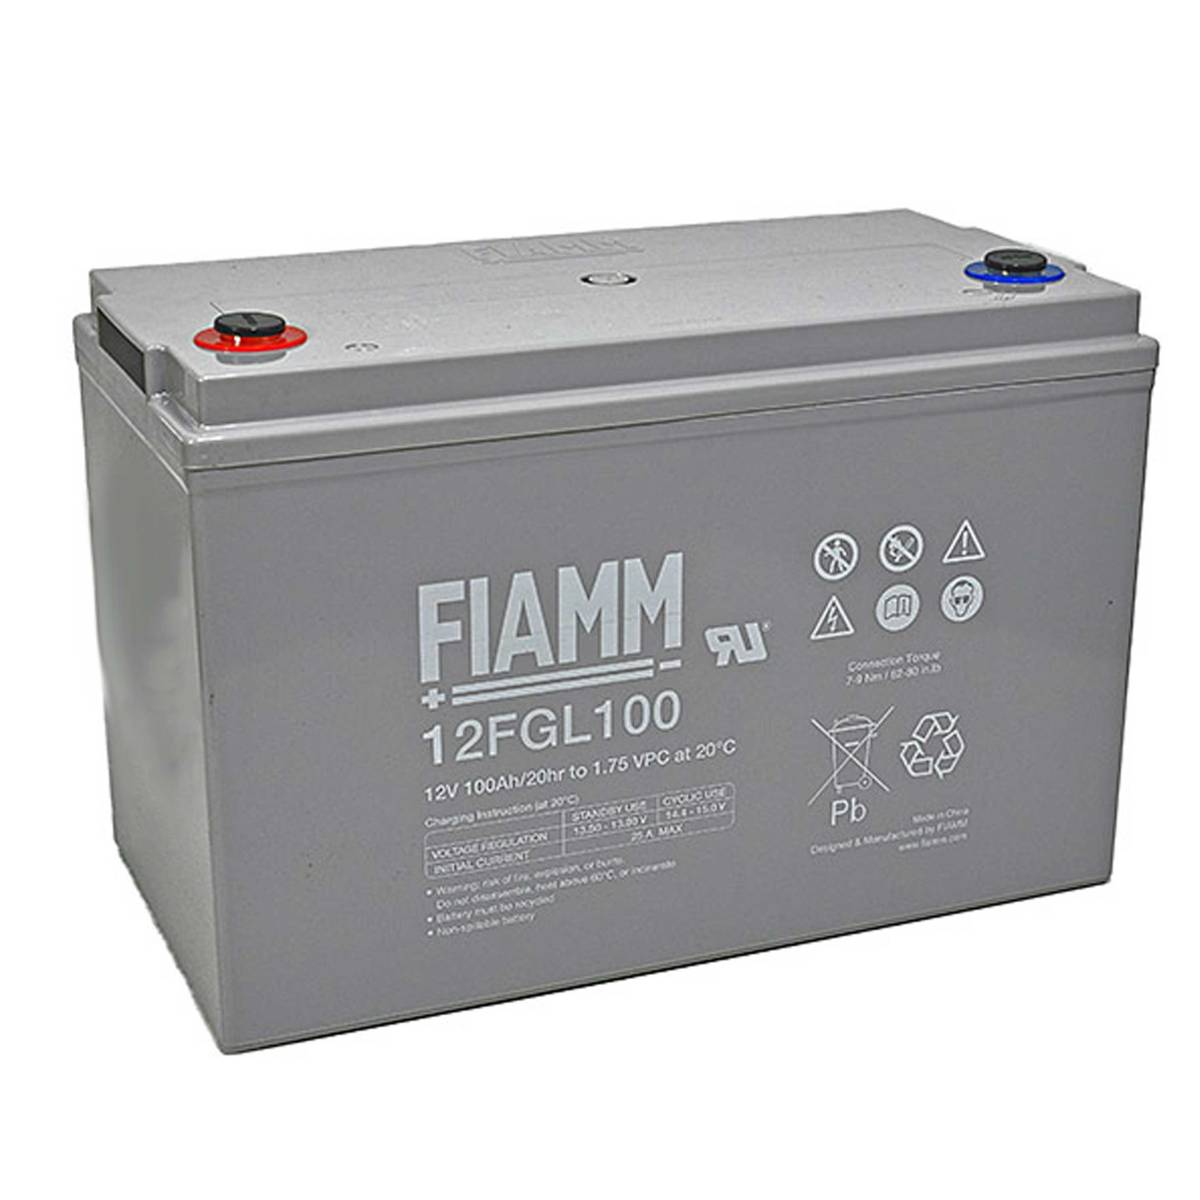 Fiamm 12FGL100 12V 100Ah lead-acid battery / AGM battery